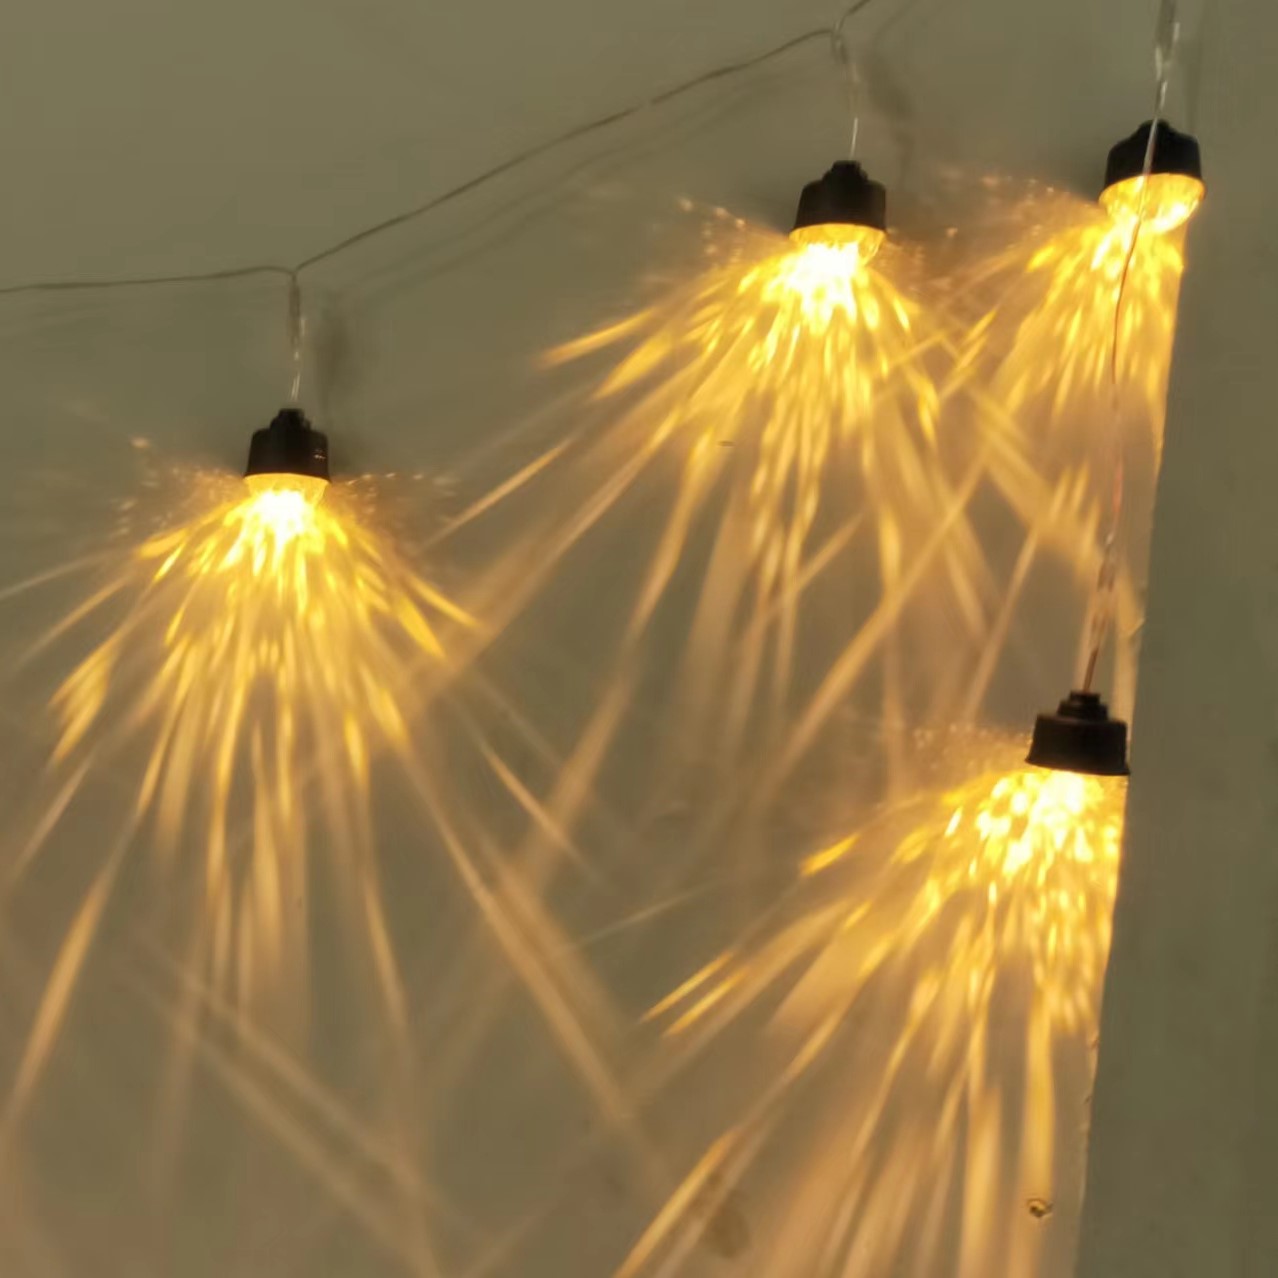 Indoor and outdoor atmosphere waterproof shower-like luminous string lights